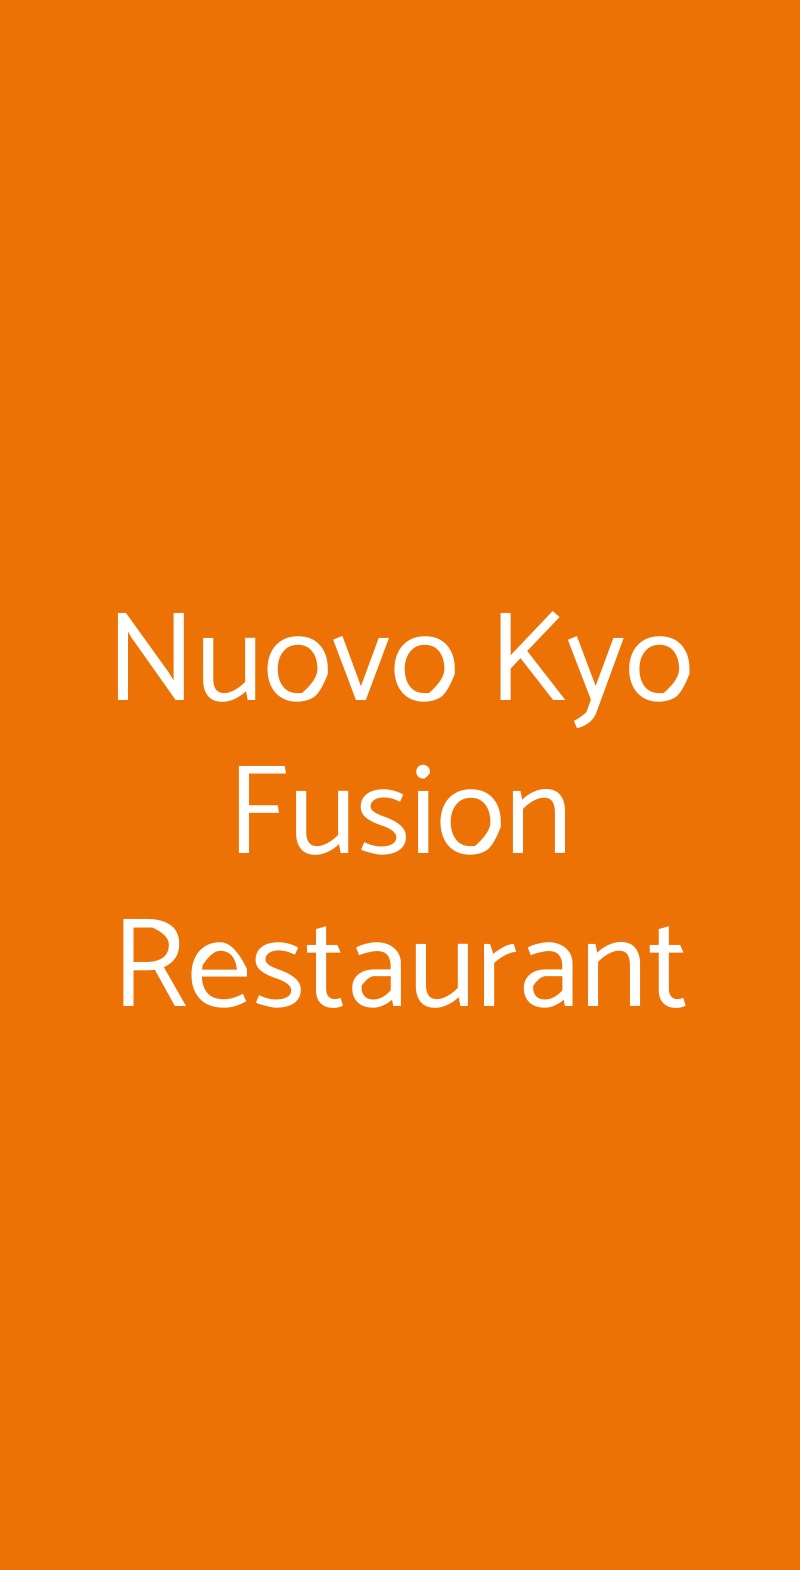 Nuovo Kyo Fusion Restaurant Milano menù 1 pagina